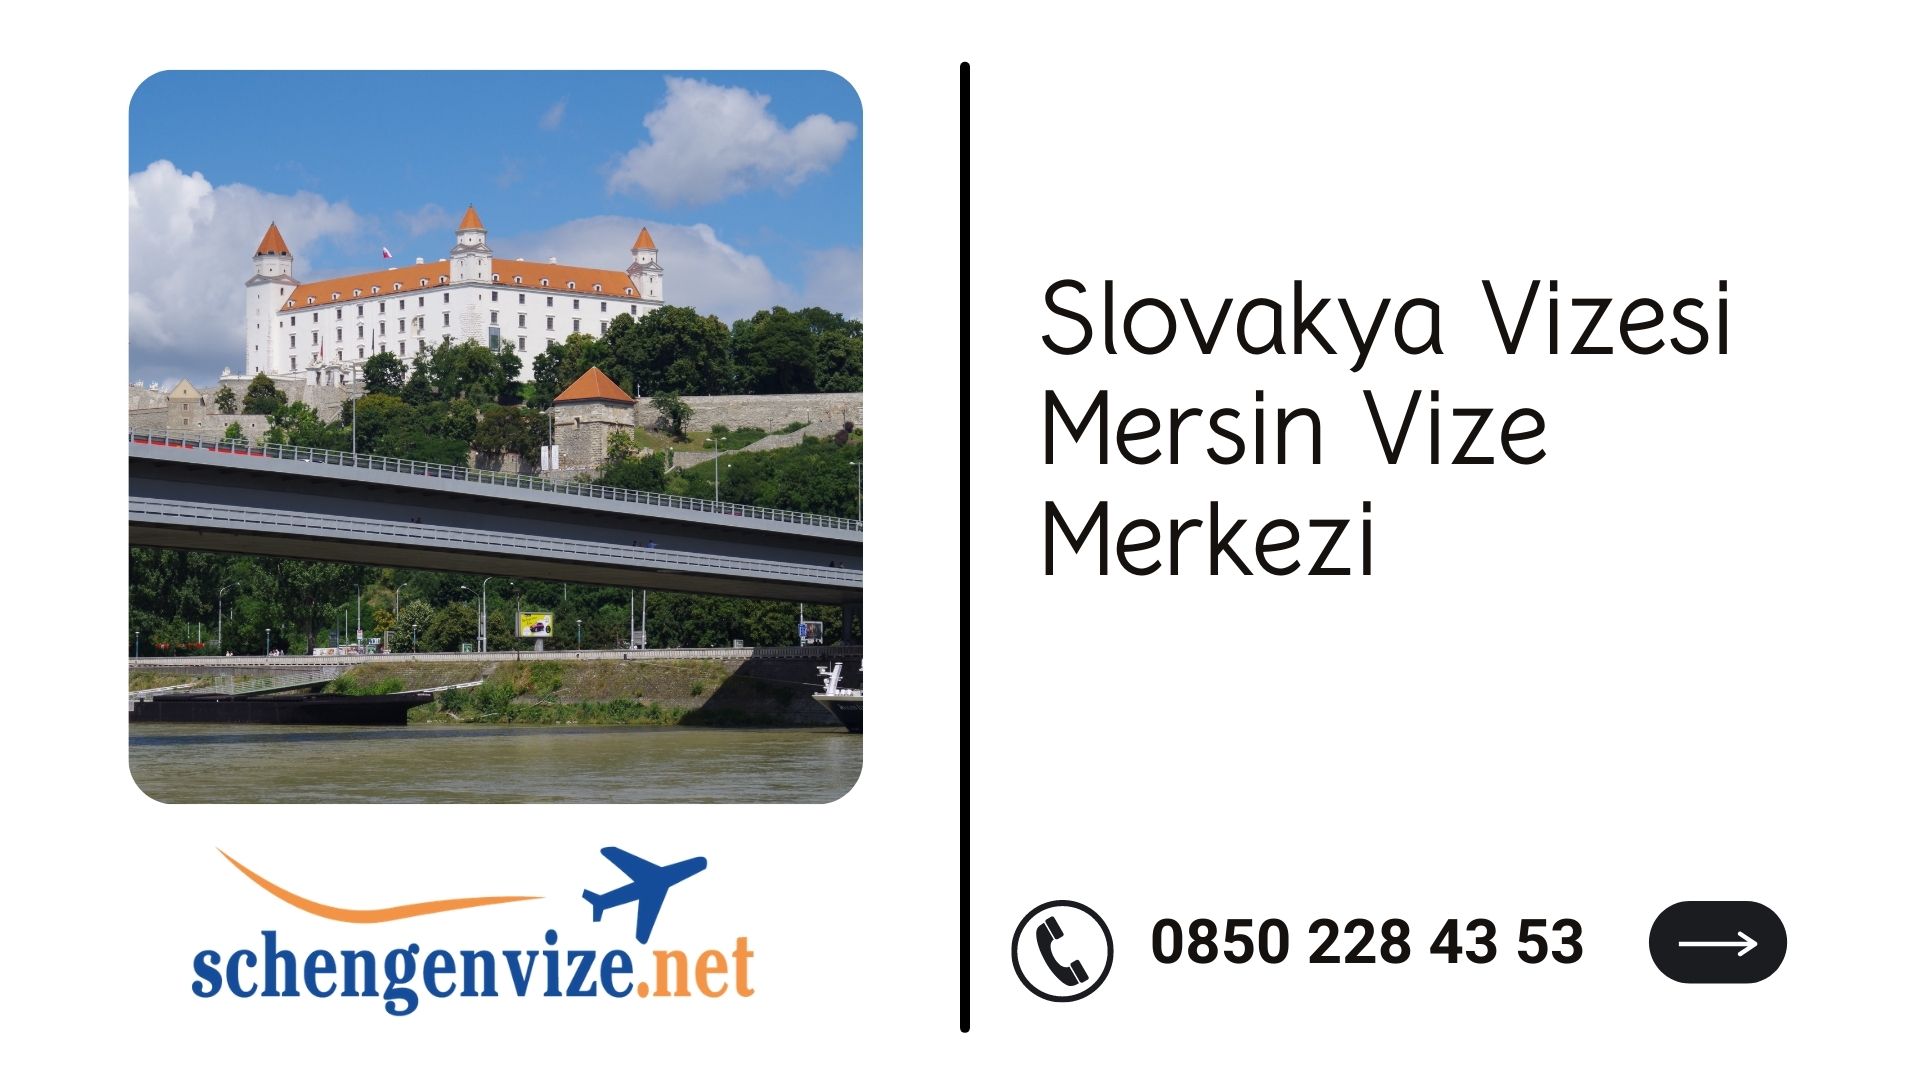 Slovakya Vizesi Mersin Vize Merkezi